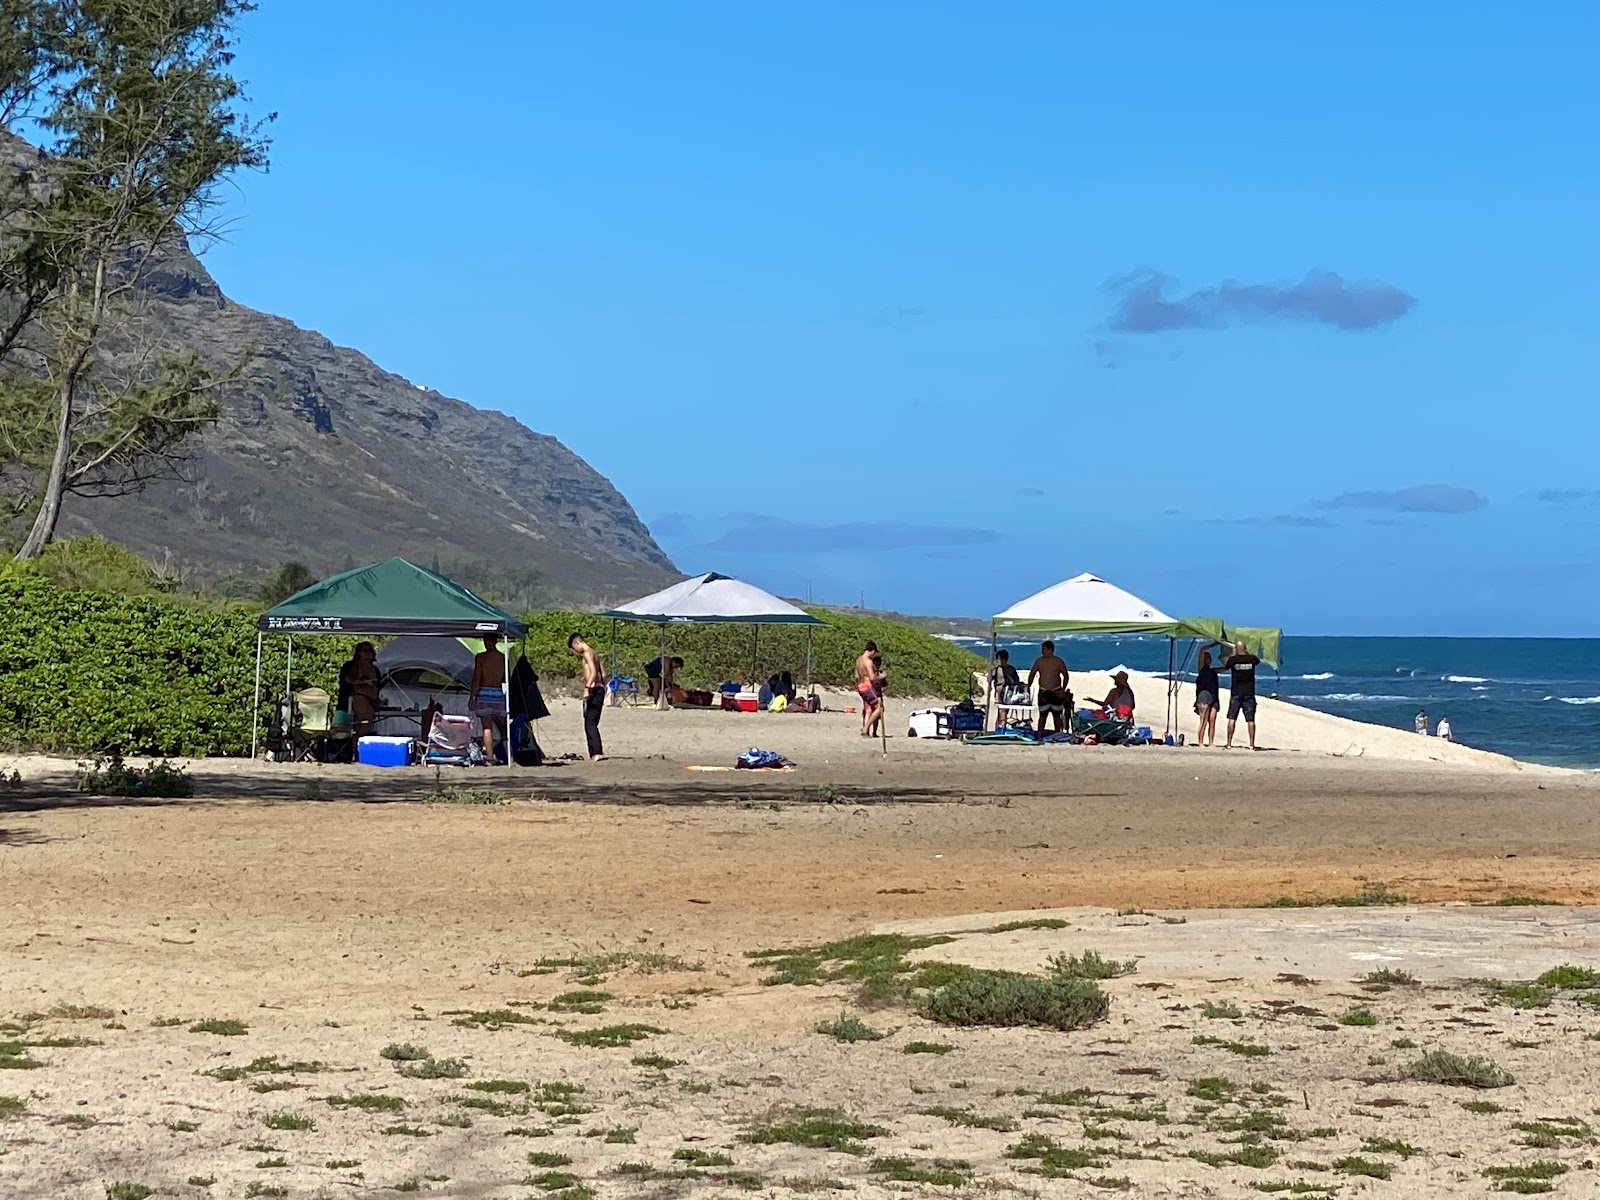 Foto af Mokule'ia Army Beach - populært sted blandt afslapningskendere